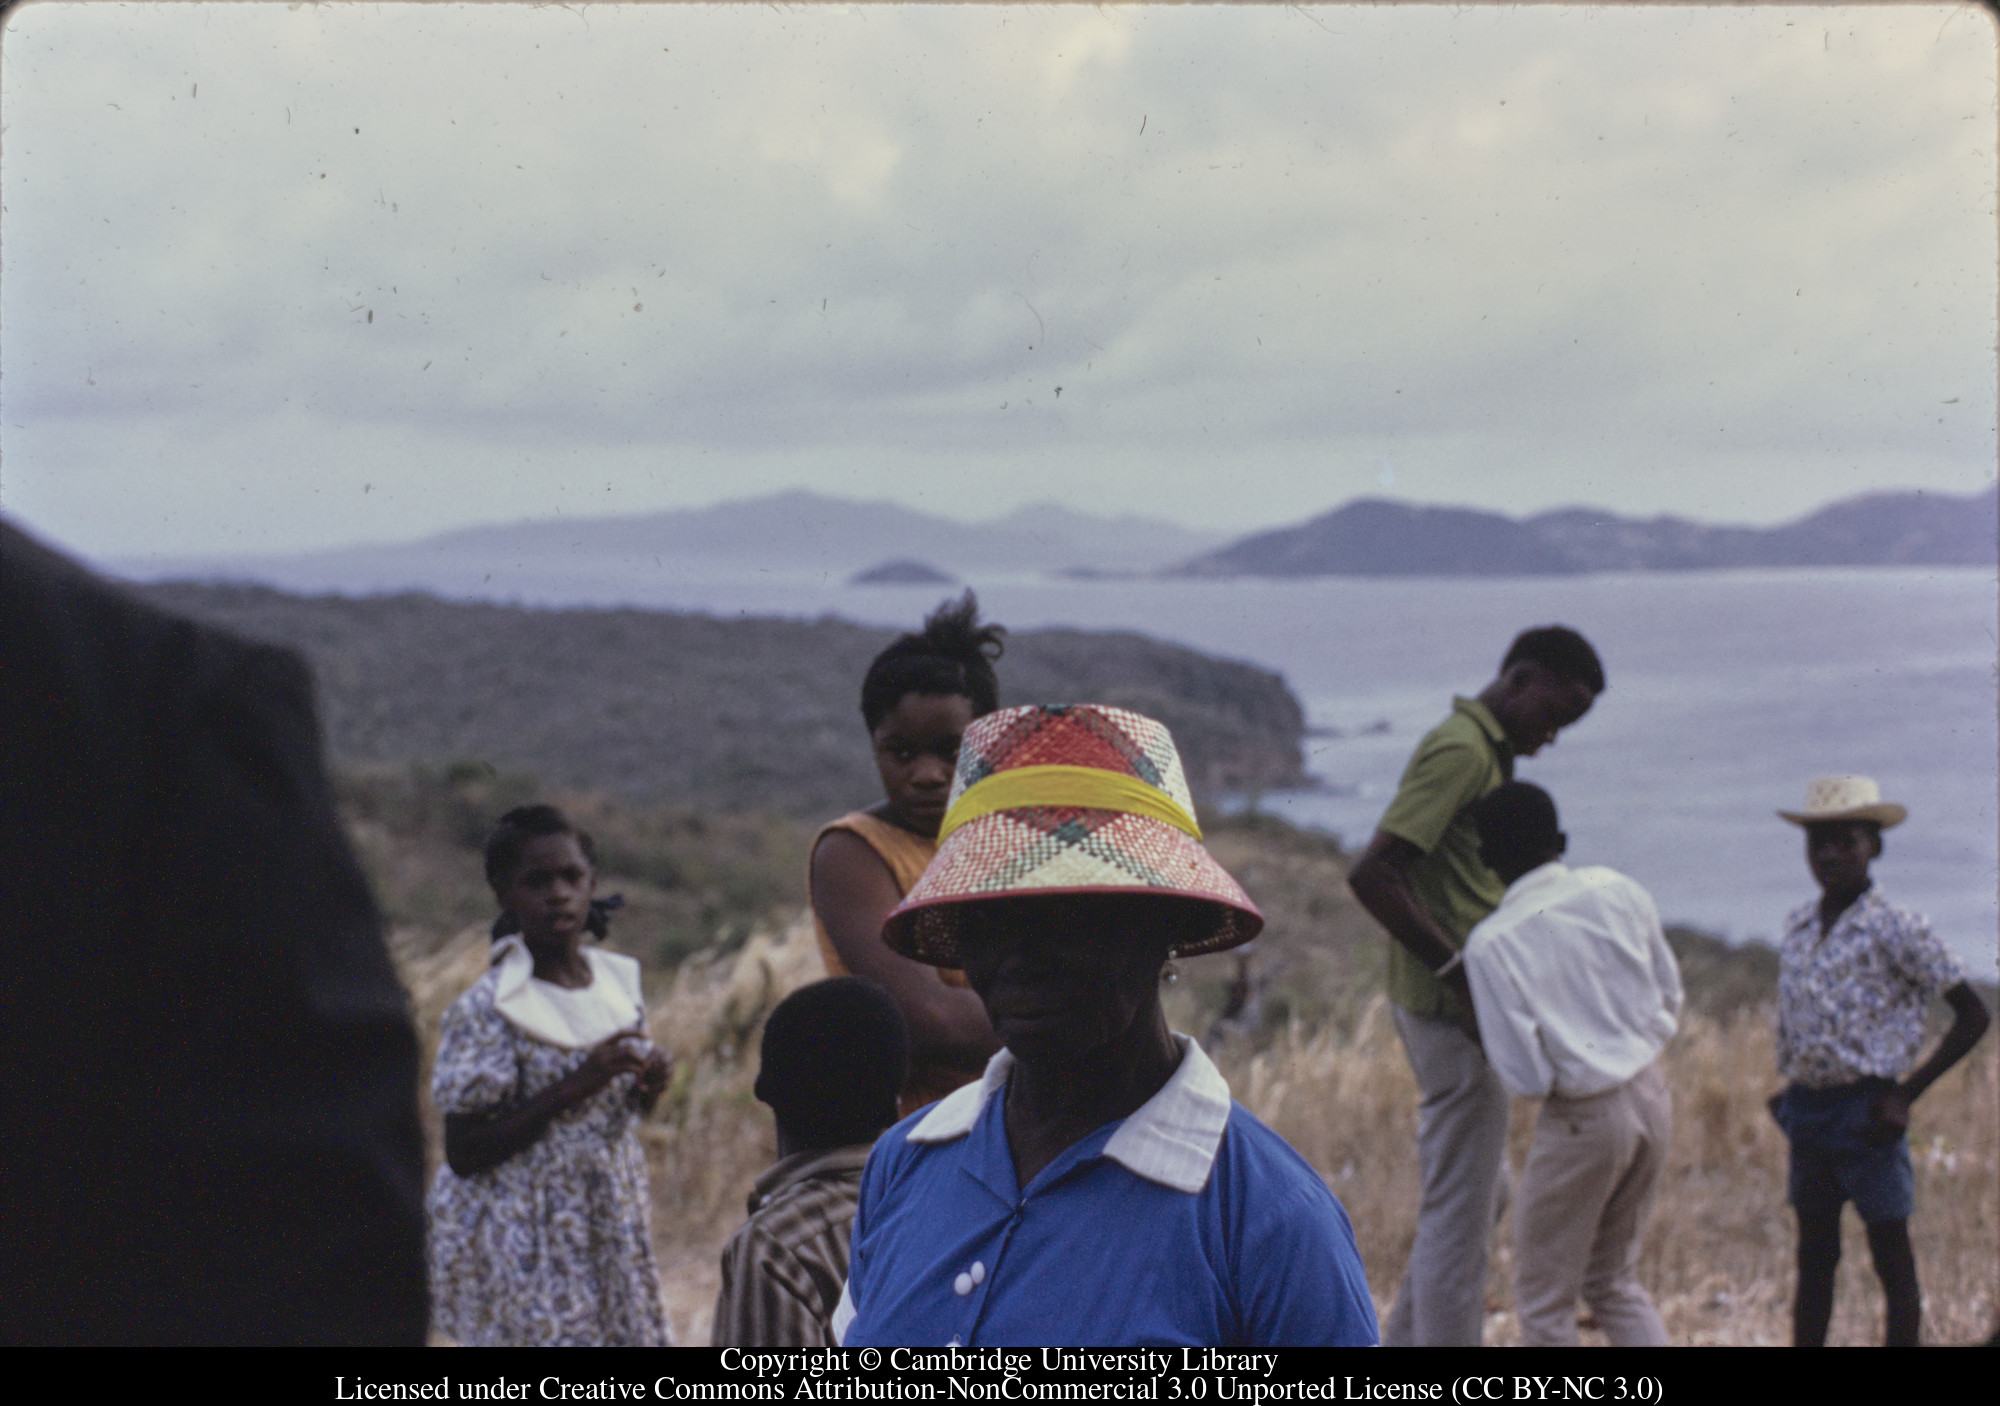 Mayrean [i.e. Mayreau?], Grenadines, 1971-05